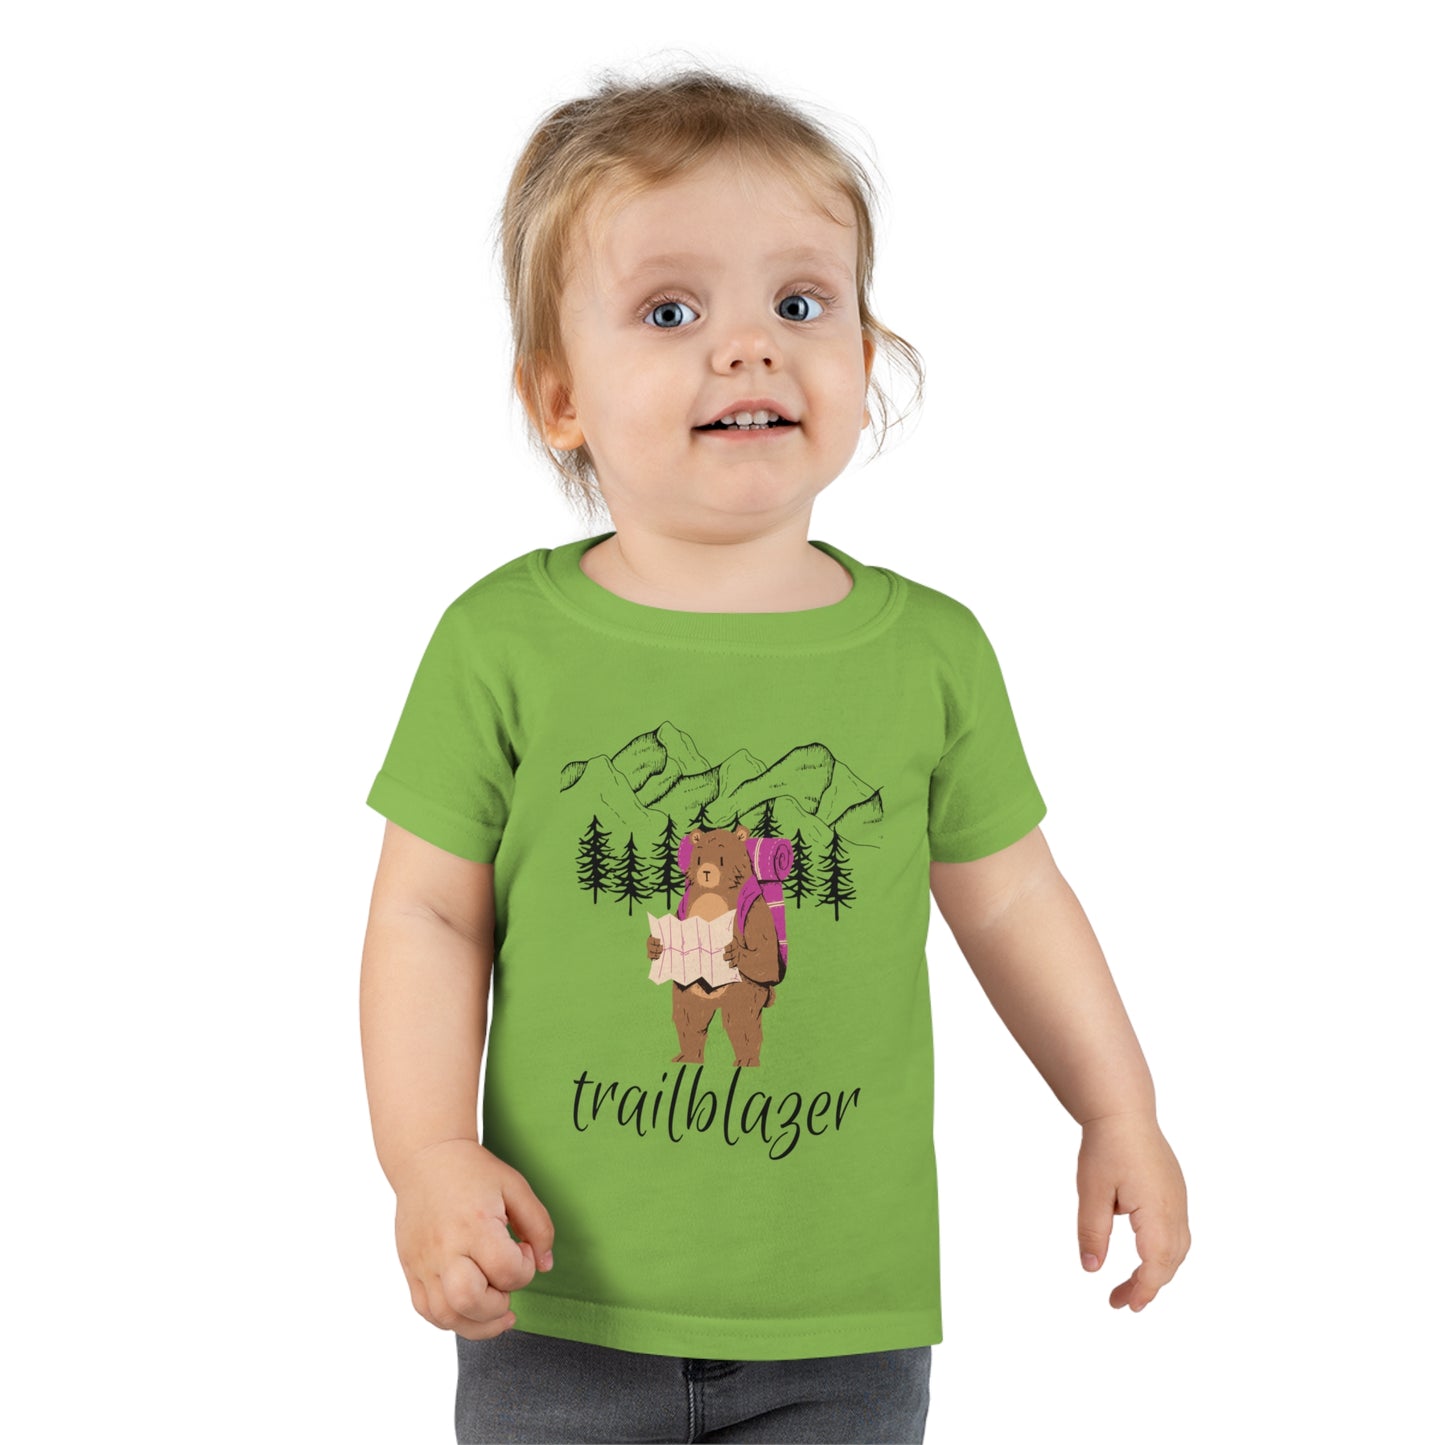 Trailblazer - Toddler T-shirt